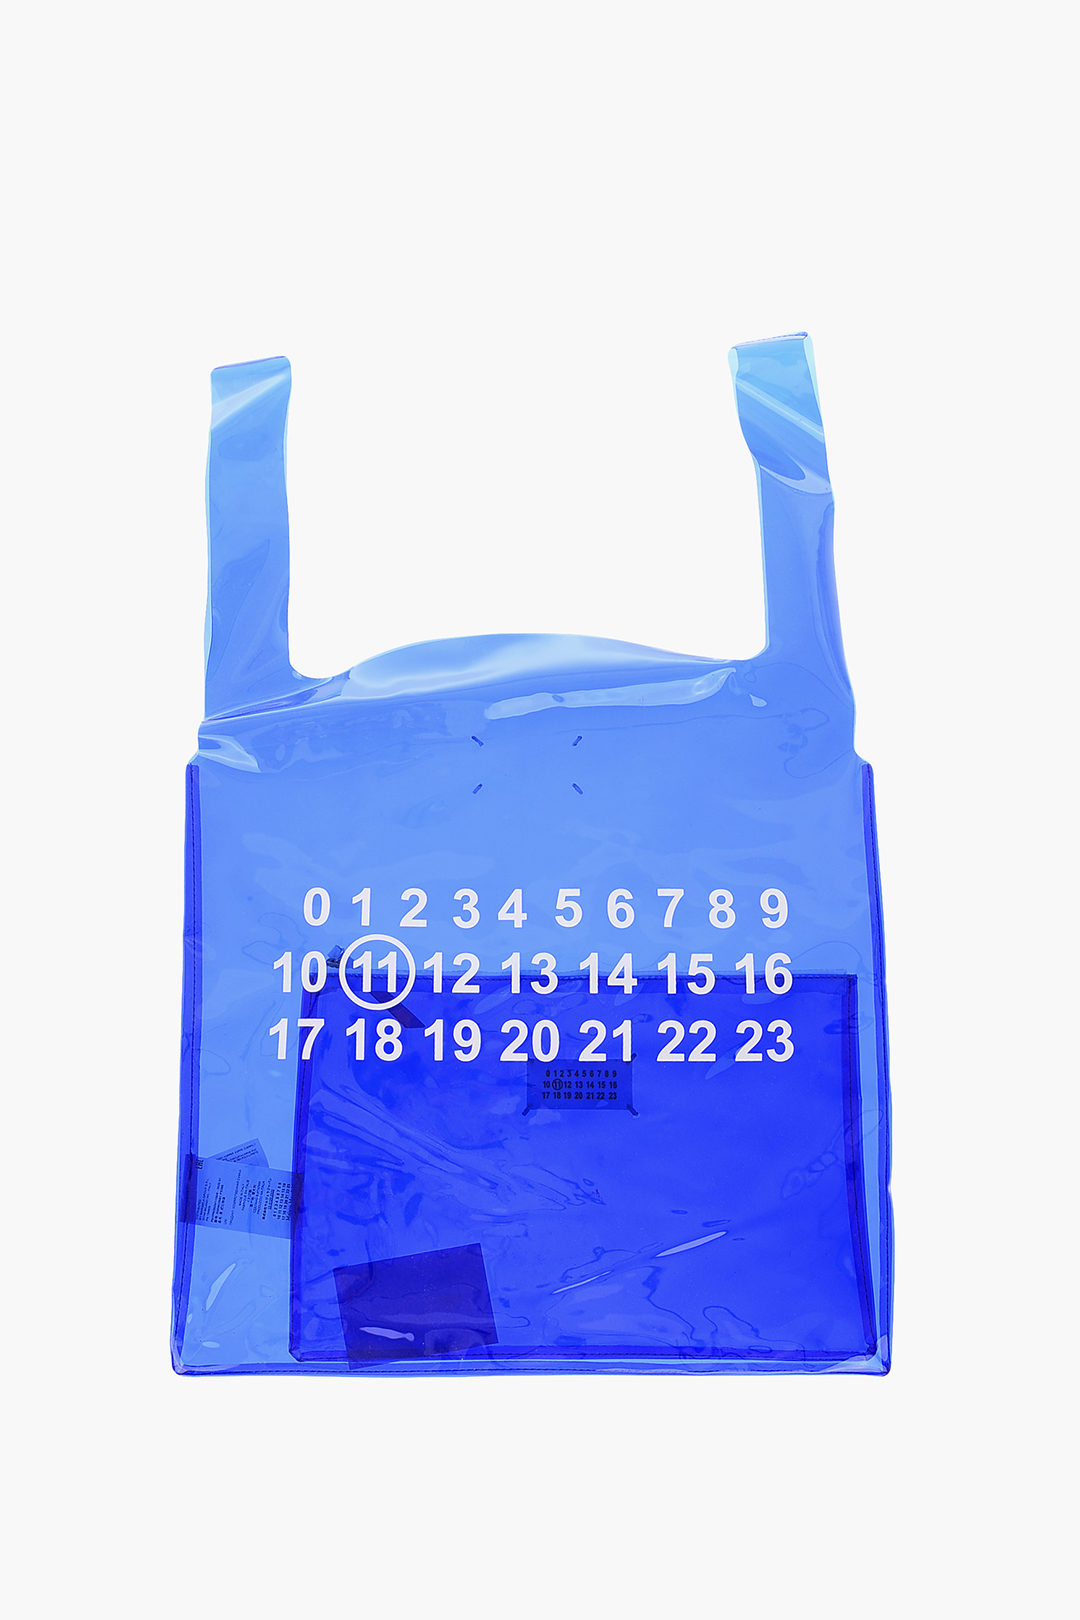 Plastic Bags | Plastic Bag Manufacturers, Wholesalers & Suppliers in India